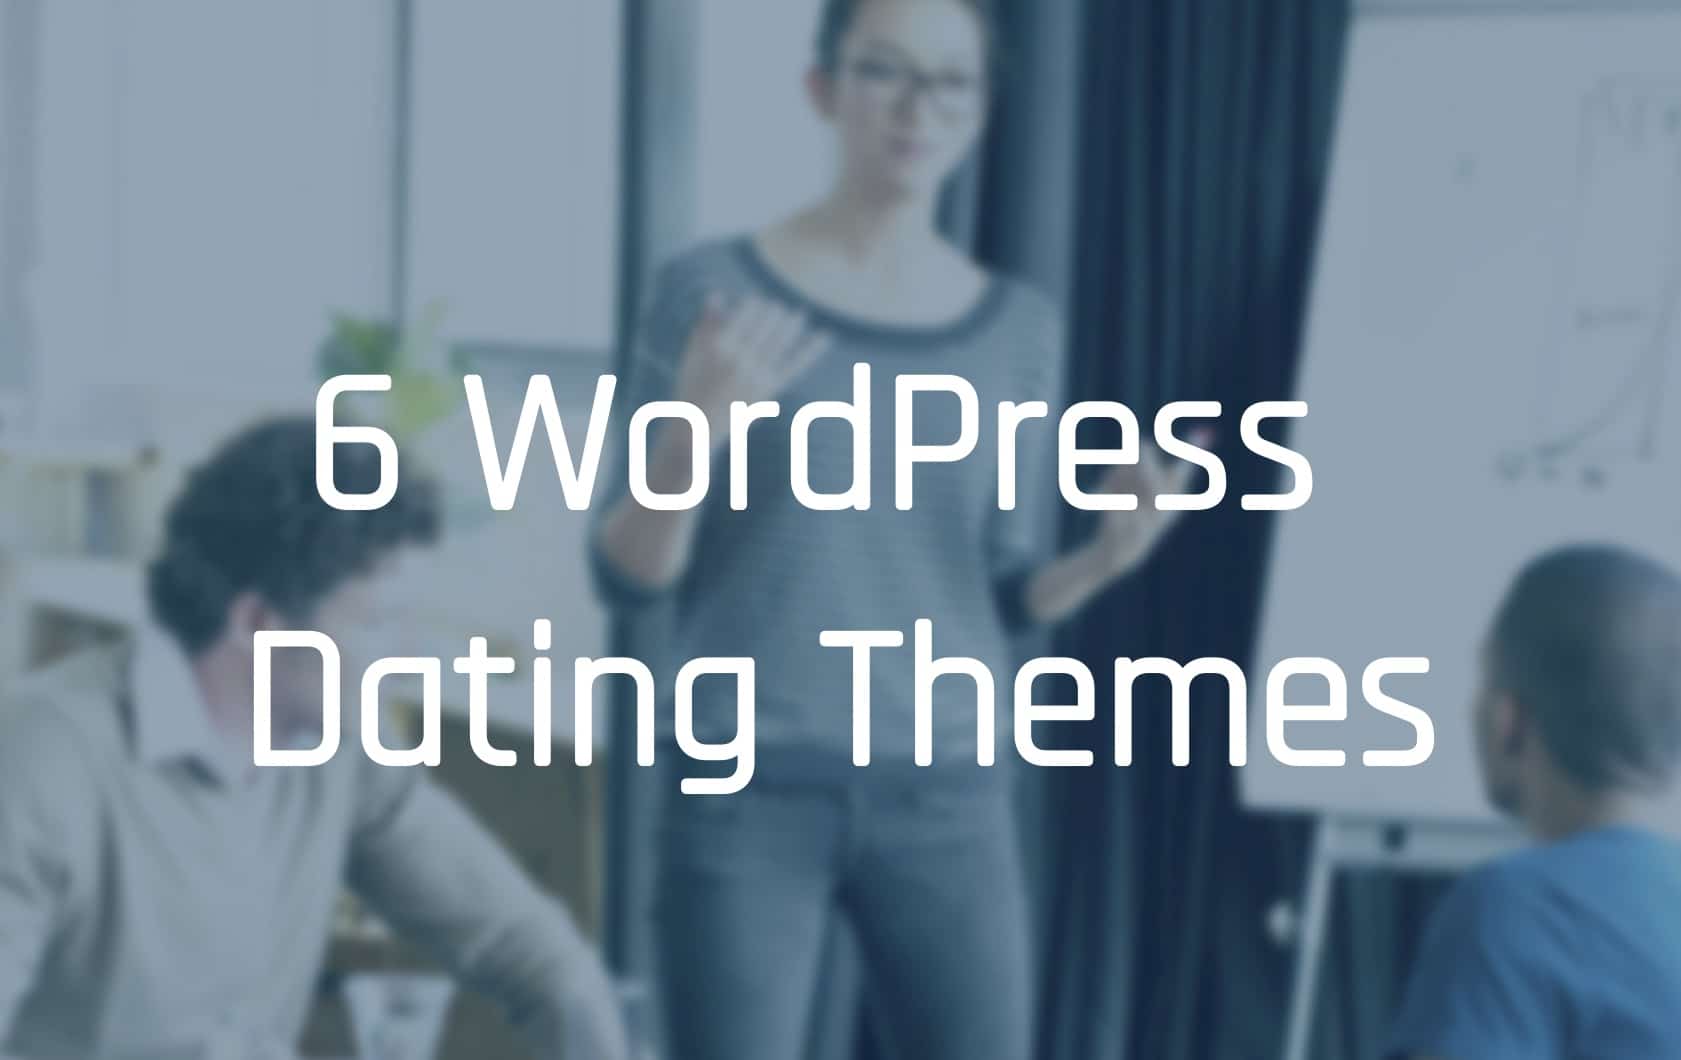 WordPress Dating Themes